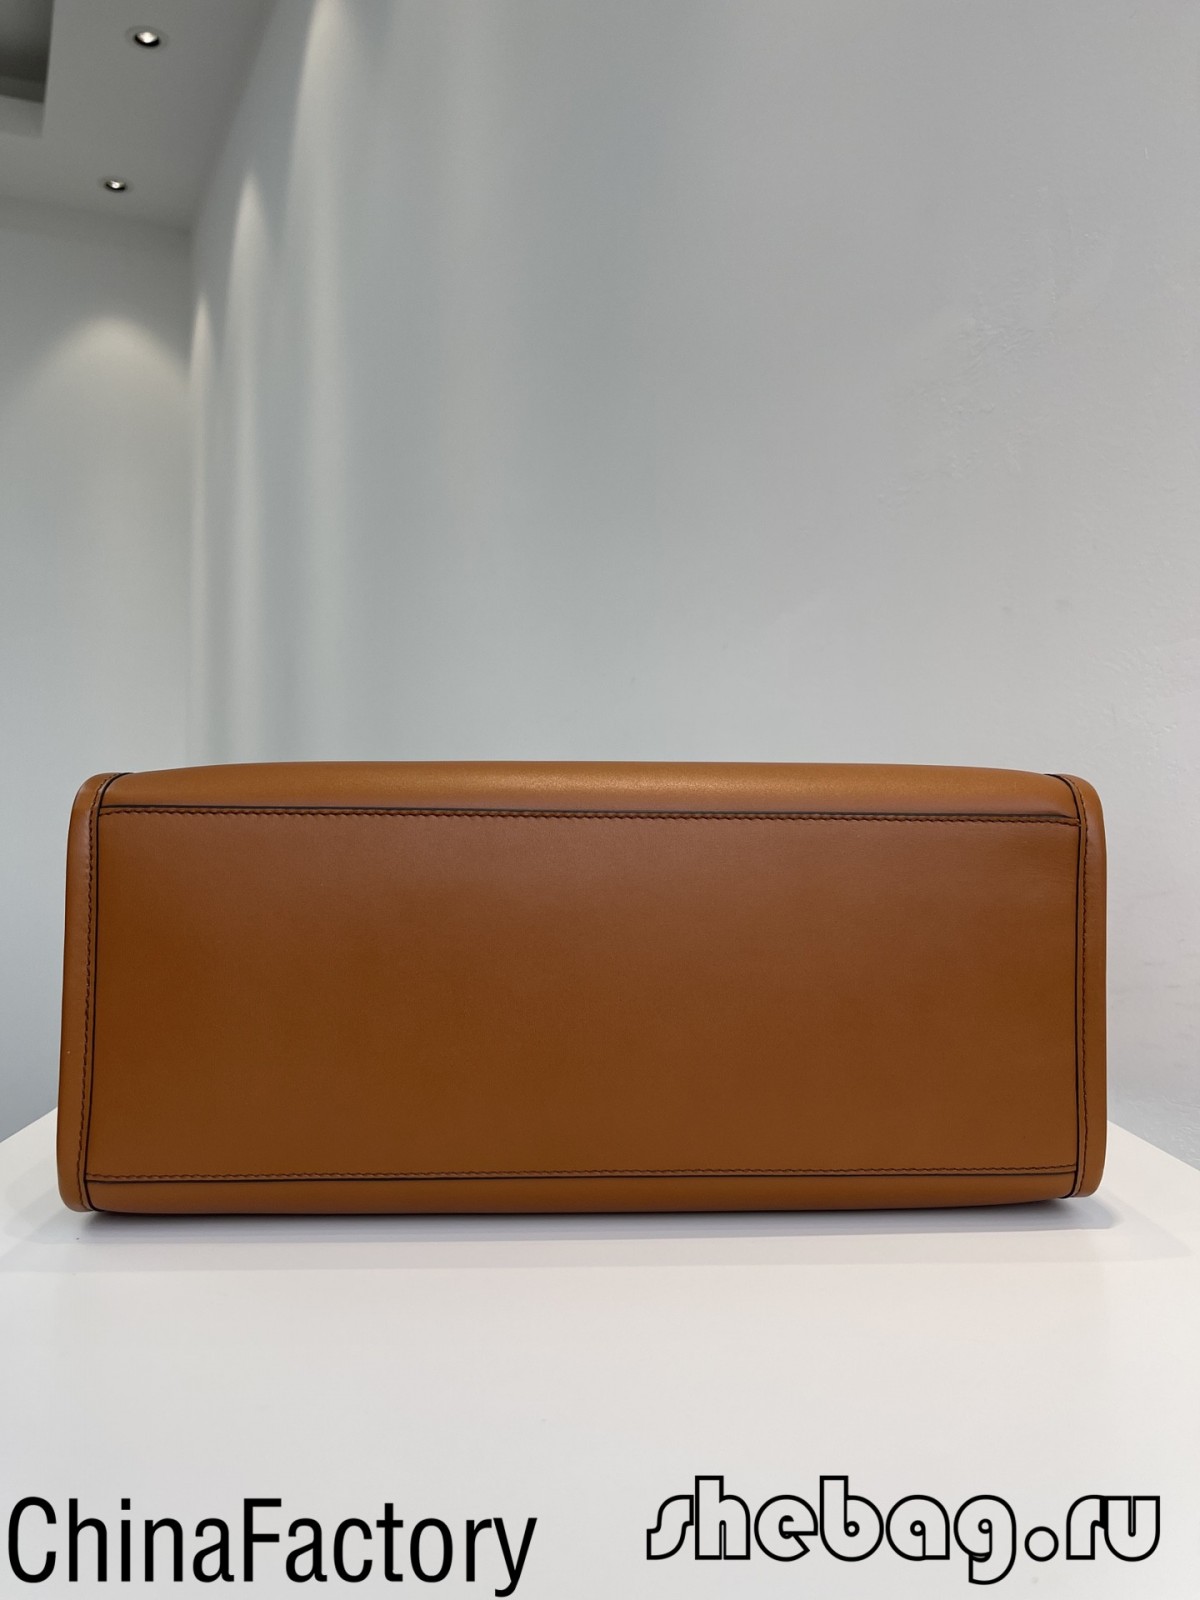 Fendi tote bag replica online sellers compare: Fendi Sunshine (2022 Hottest)-Best Quality Fake Louis Vuitton Bag Online Store, Replica designer bag ru